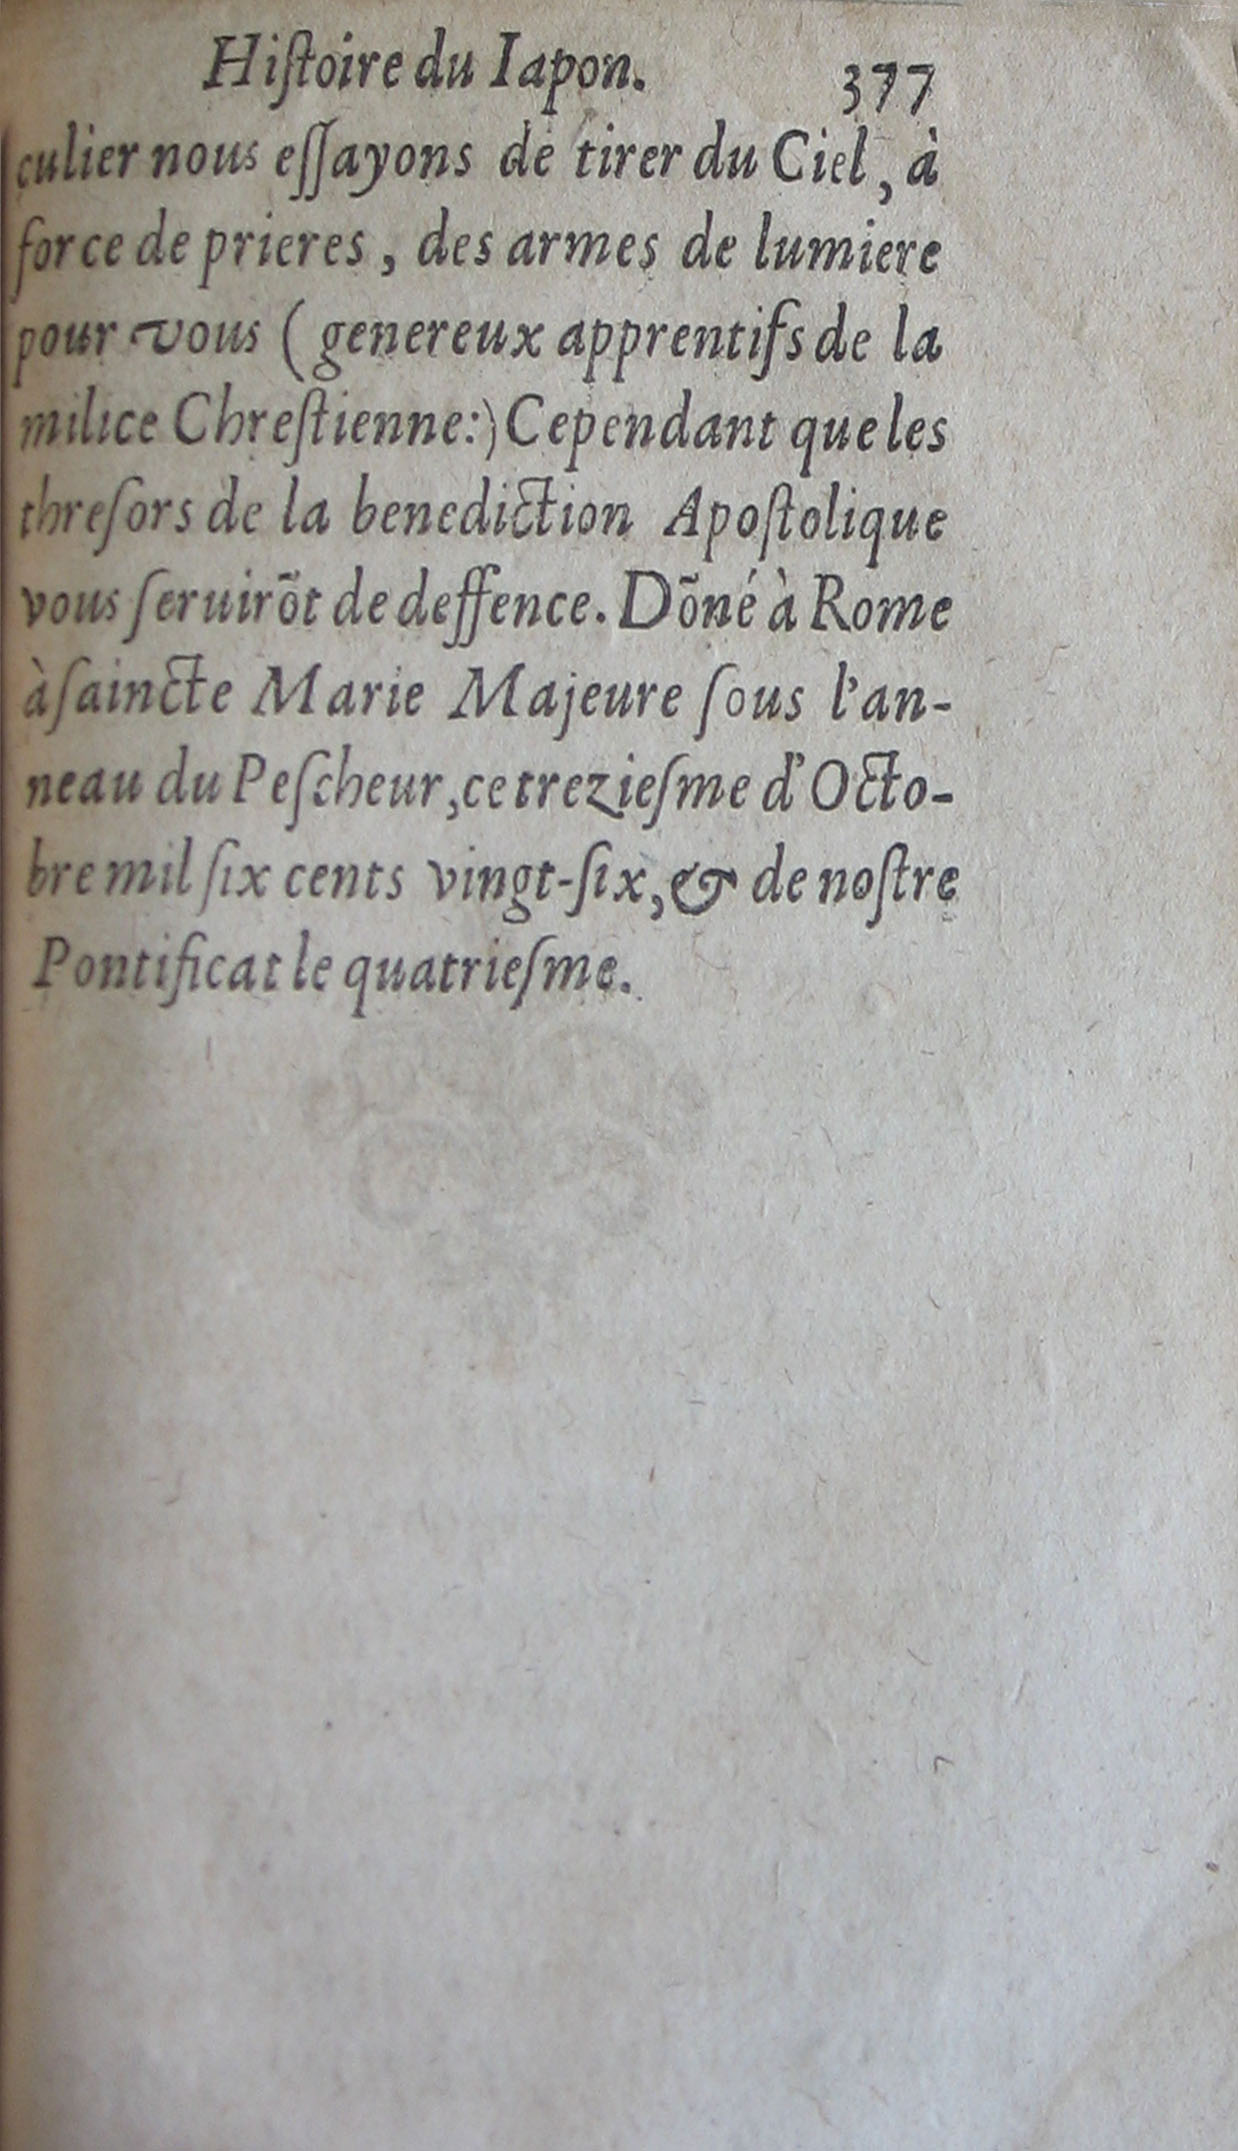 p. 377.JPG